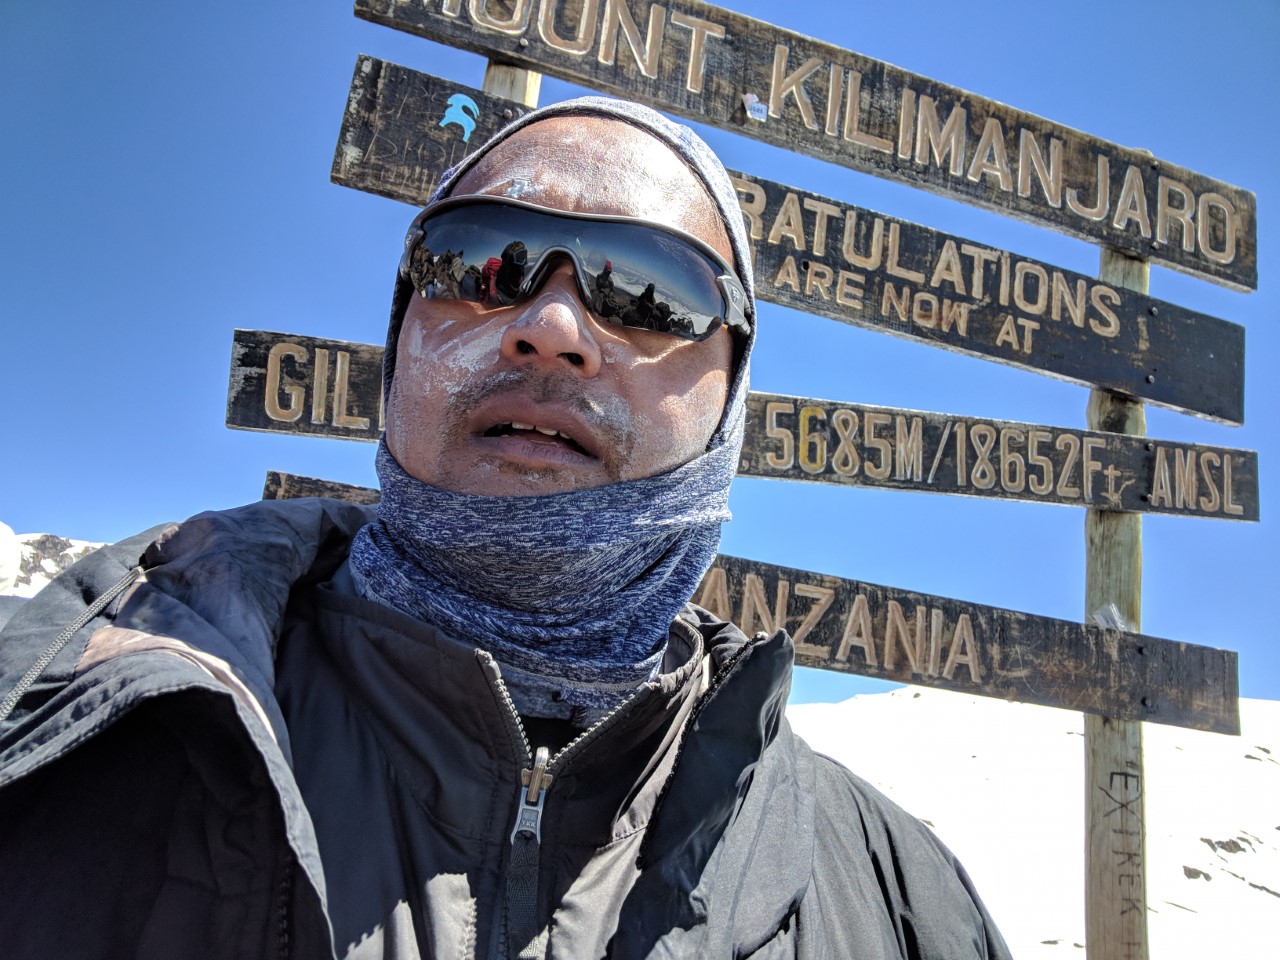 Rahul Ramachandran reaches Gilman’s Point, one of three summit points on Mount Kilimanjaro in Tanzania. 